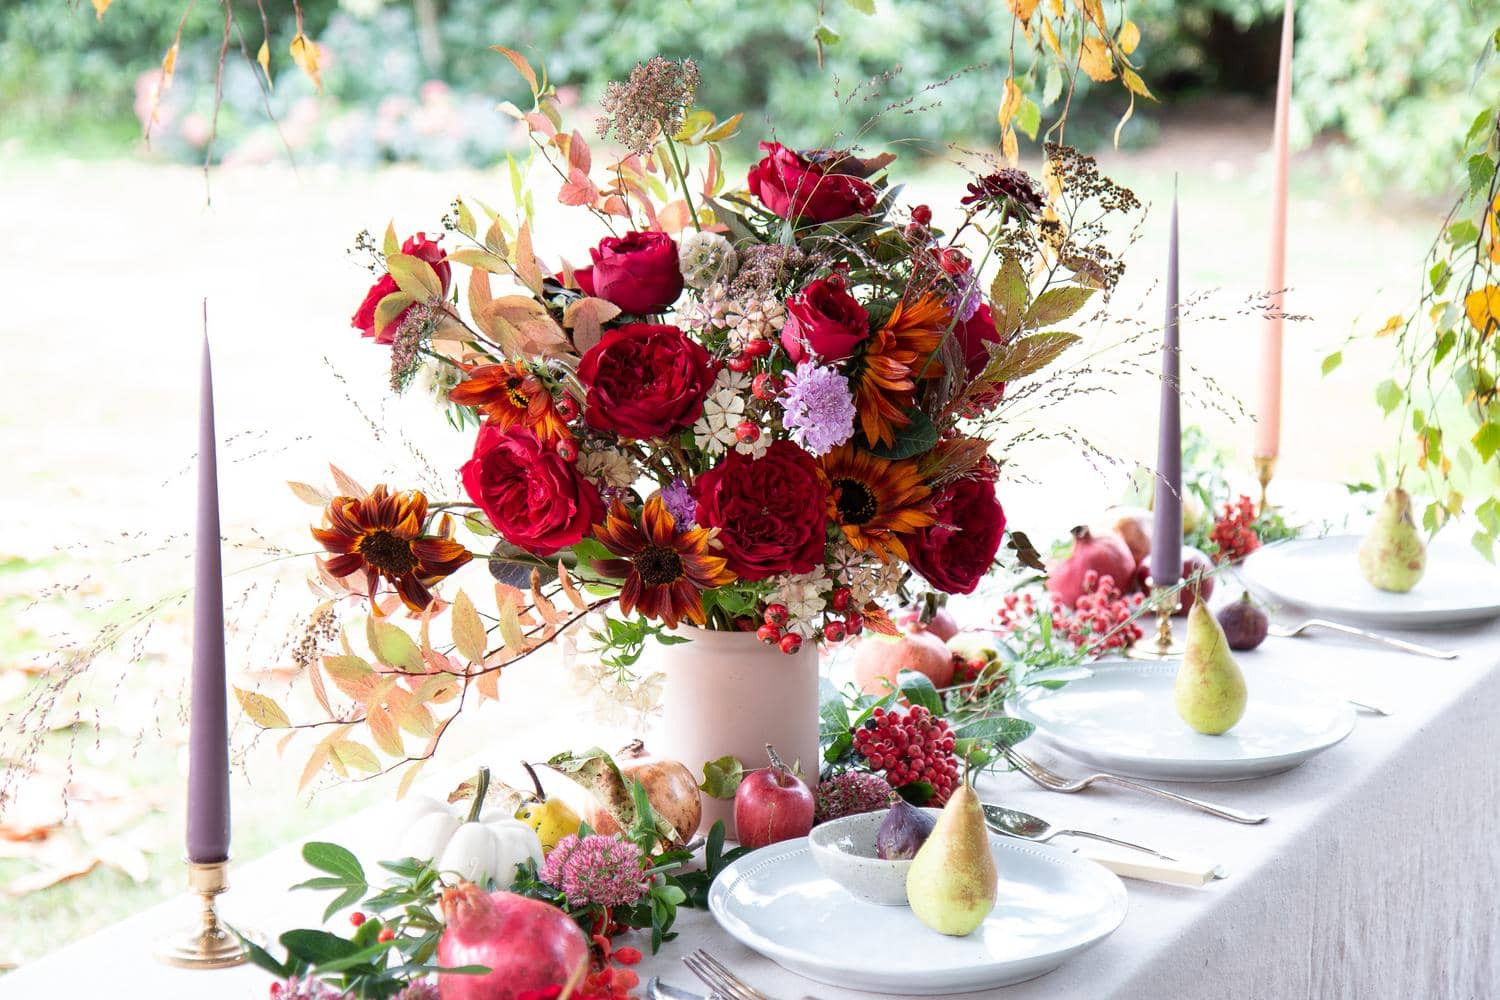 Tess diseño de mesa de celebración de boda al aire libre de rosas rojas